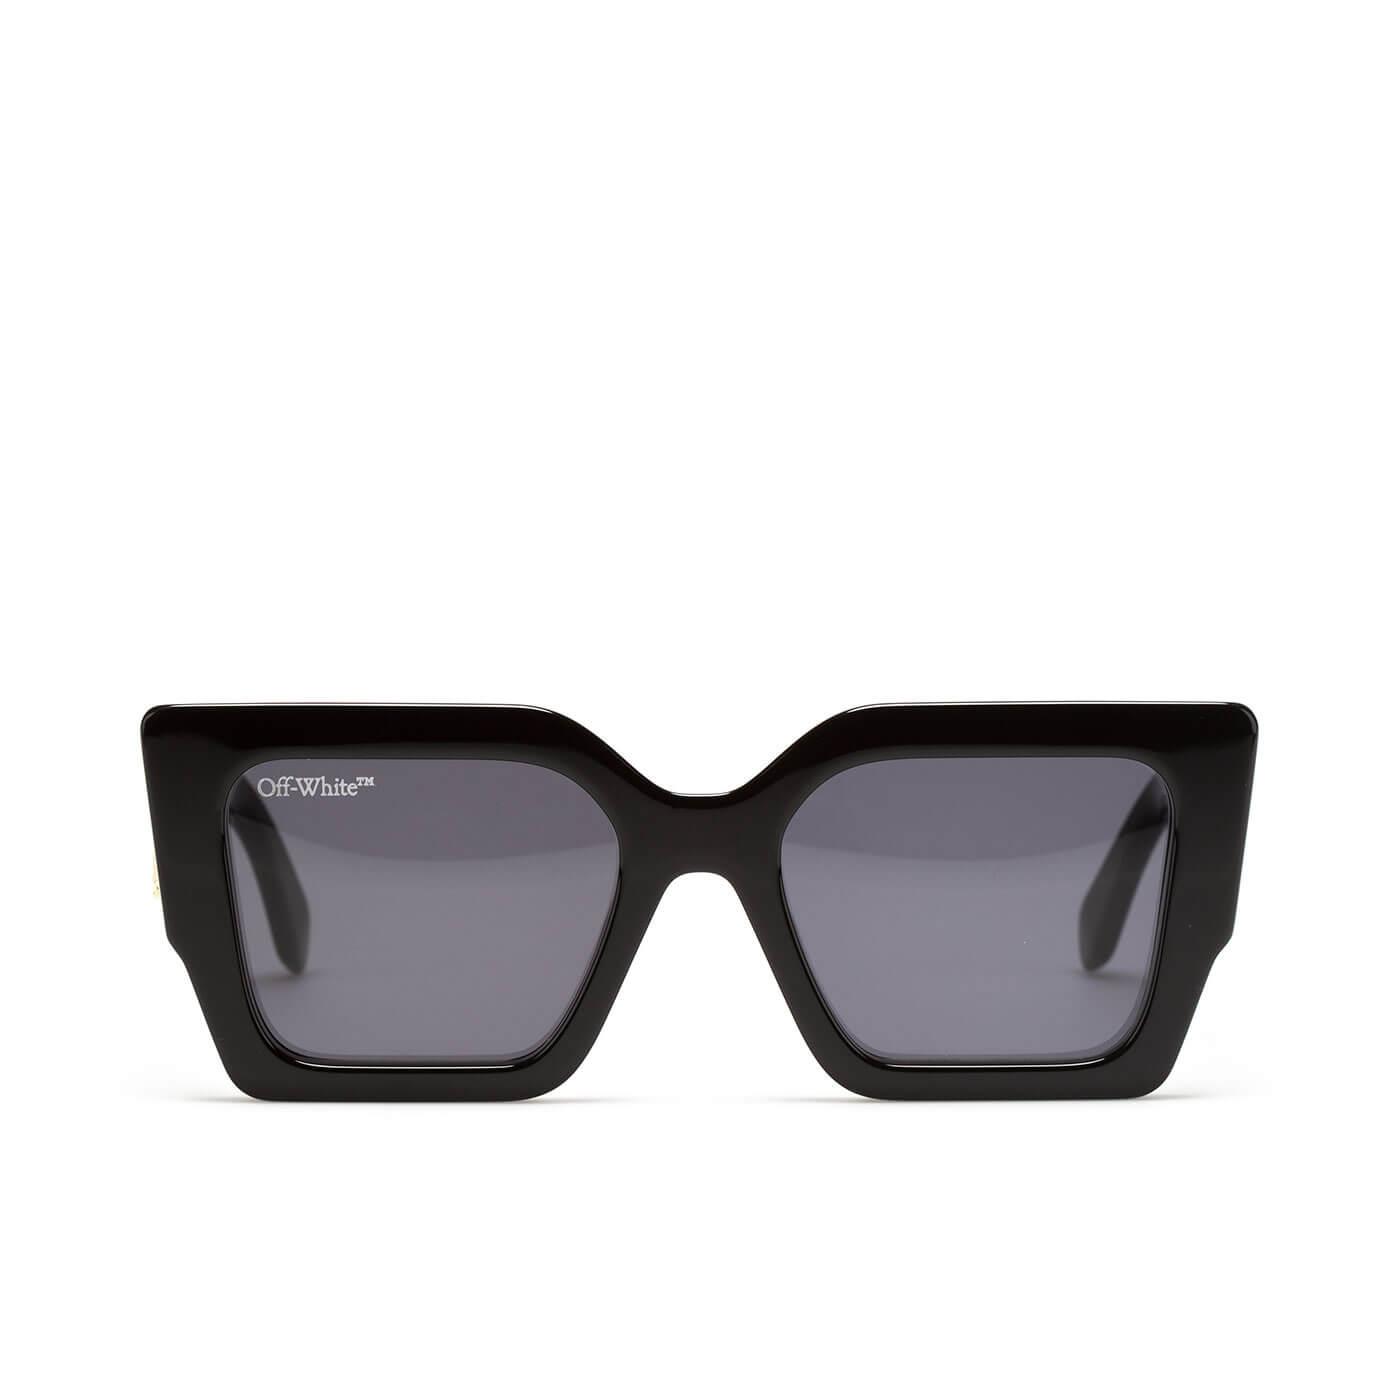 Off-White c/o Virgil Abloh Catalina Squared Acetate Sunglasses in Black/Smoke Womens Sunglasses Off-White c/o Virgil Abloh Sunglasses Grey 